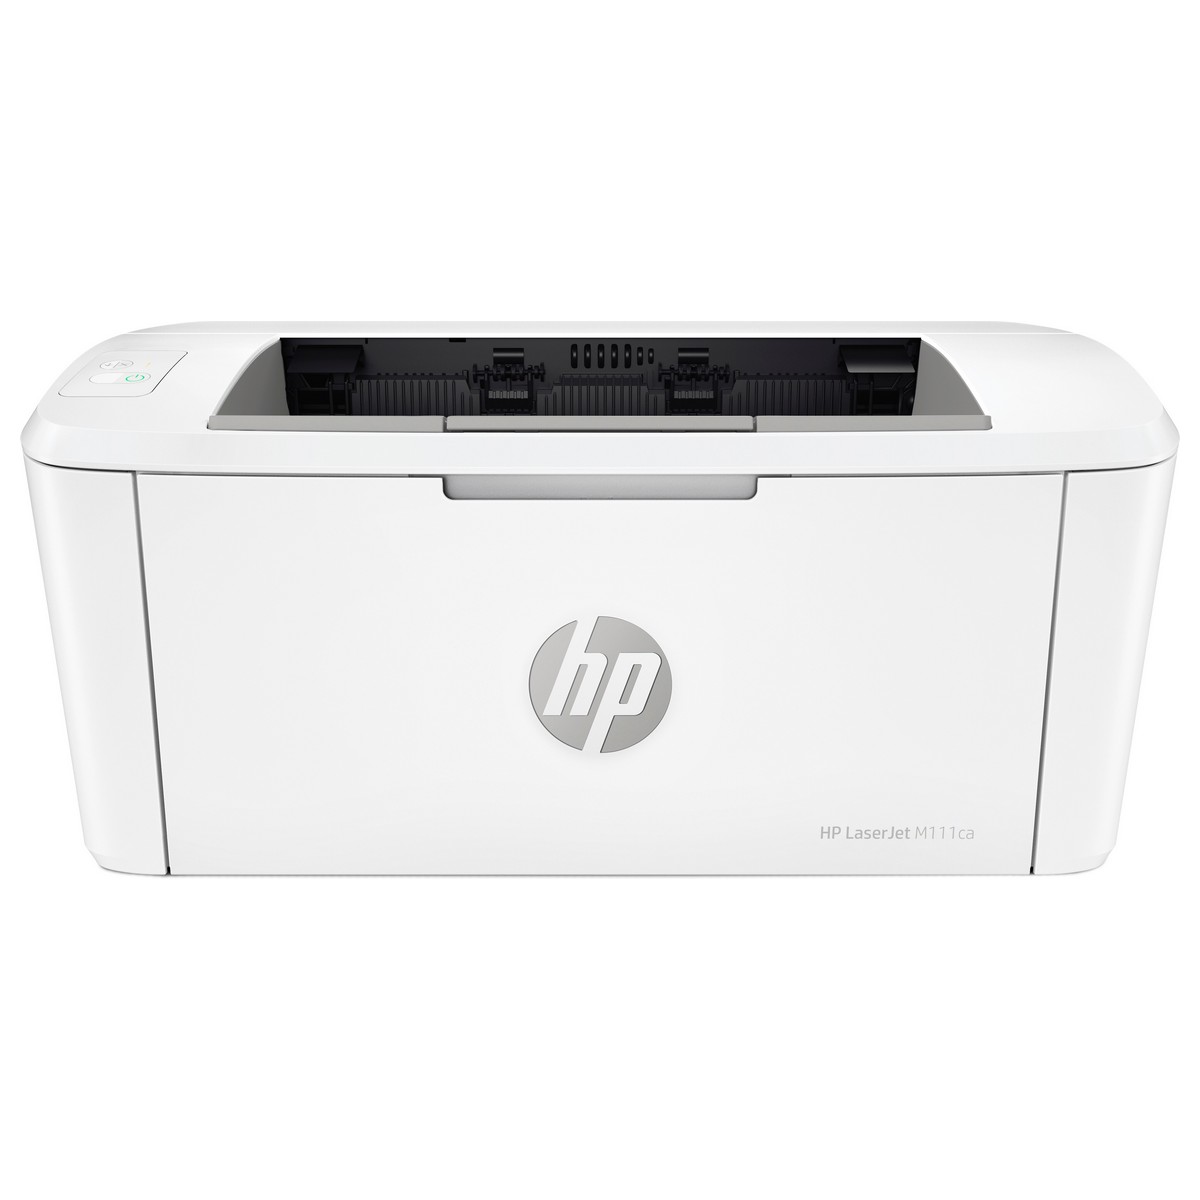 Принтер HP LJ M111ca